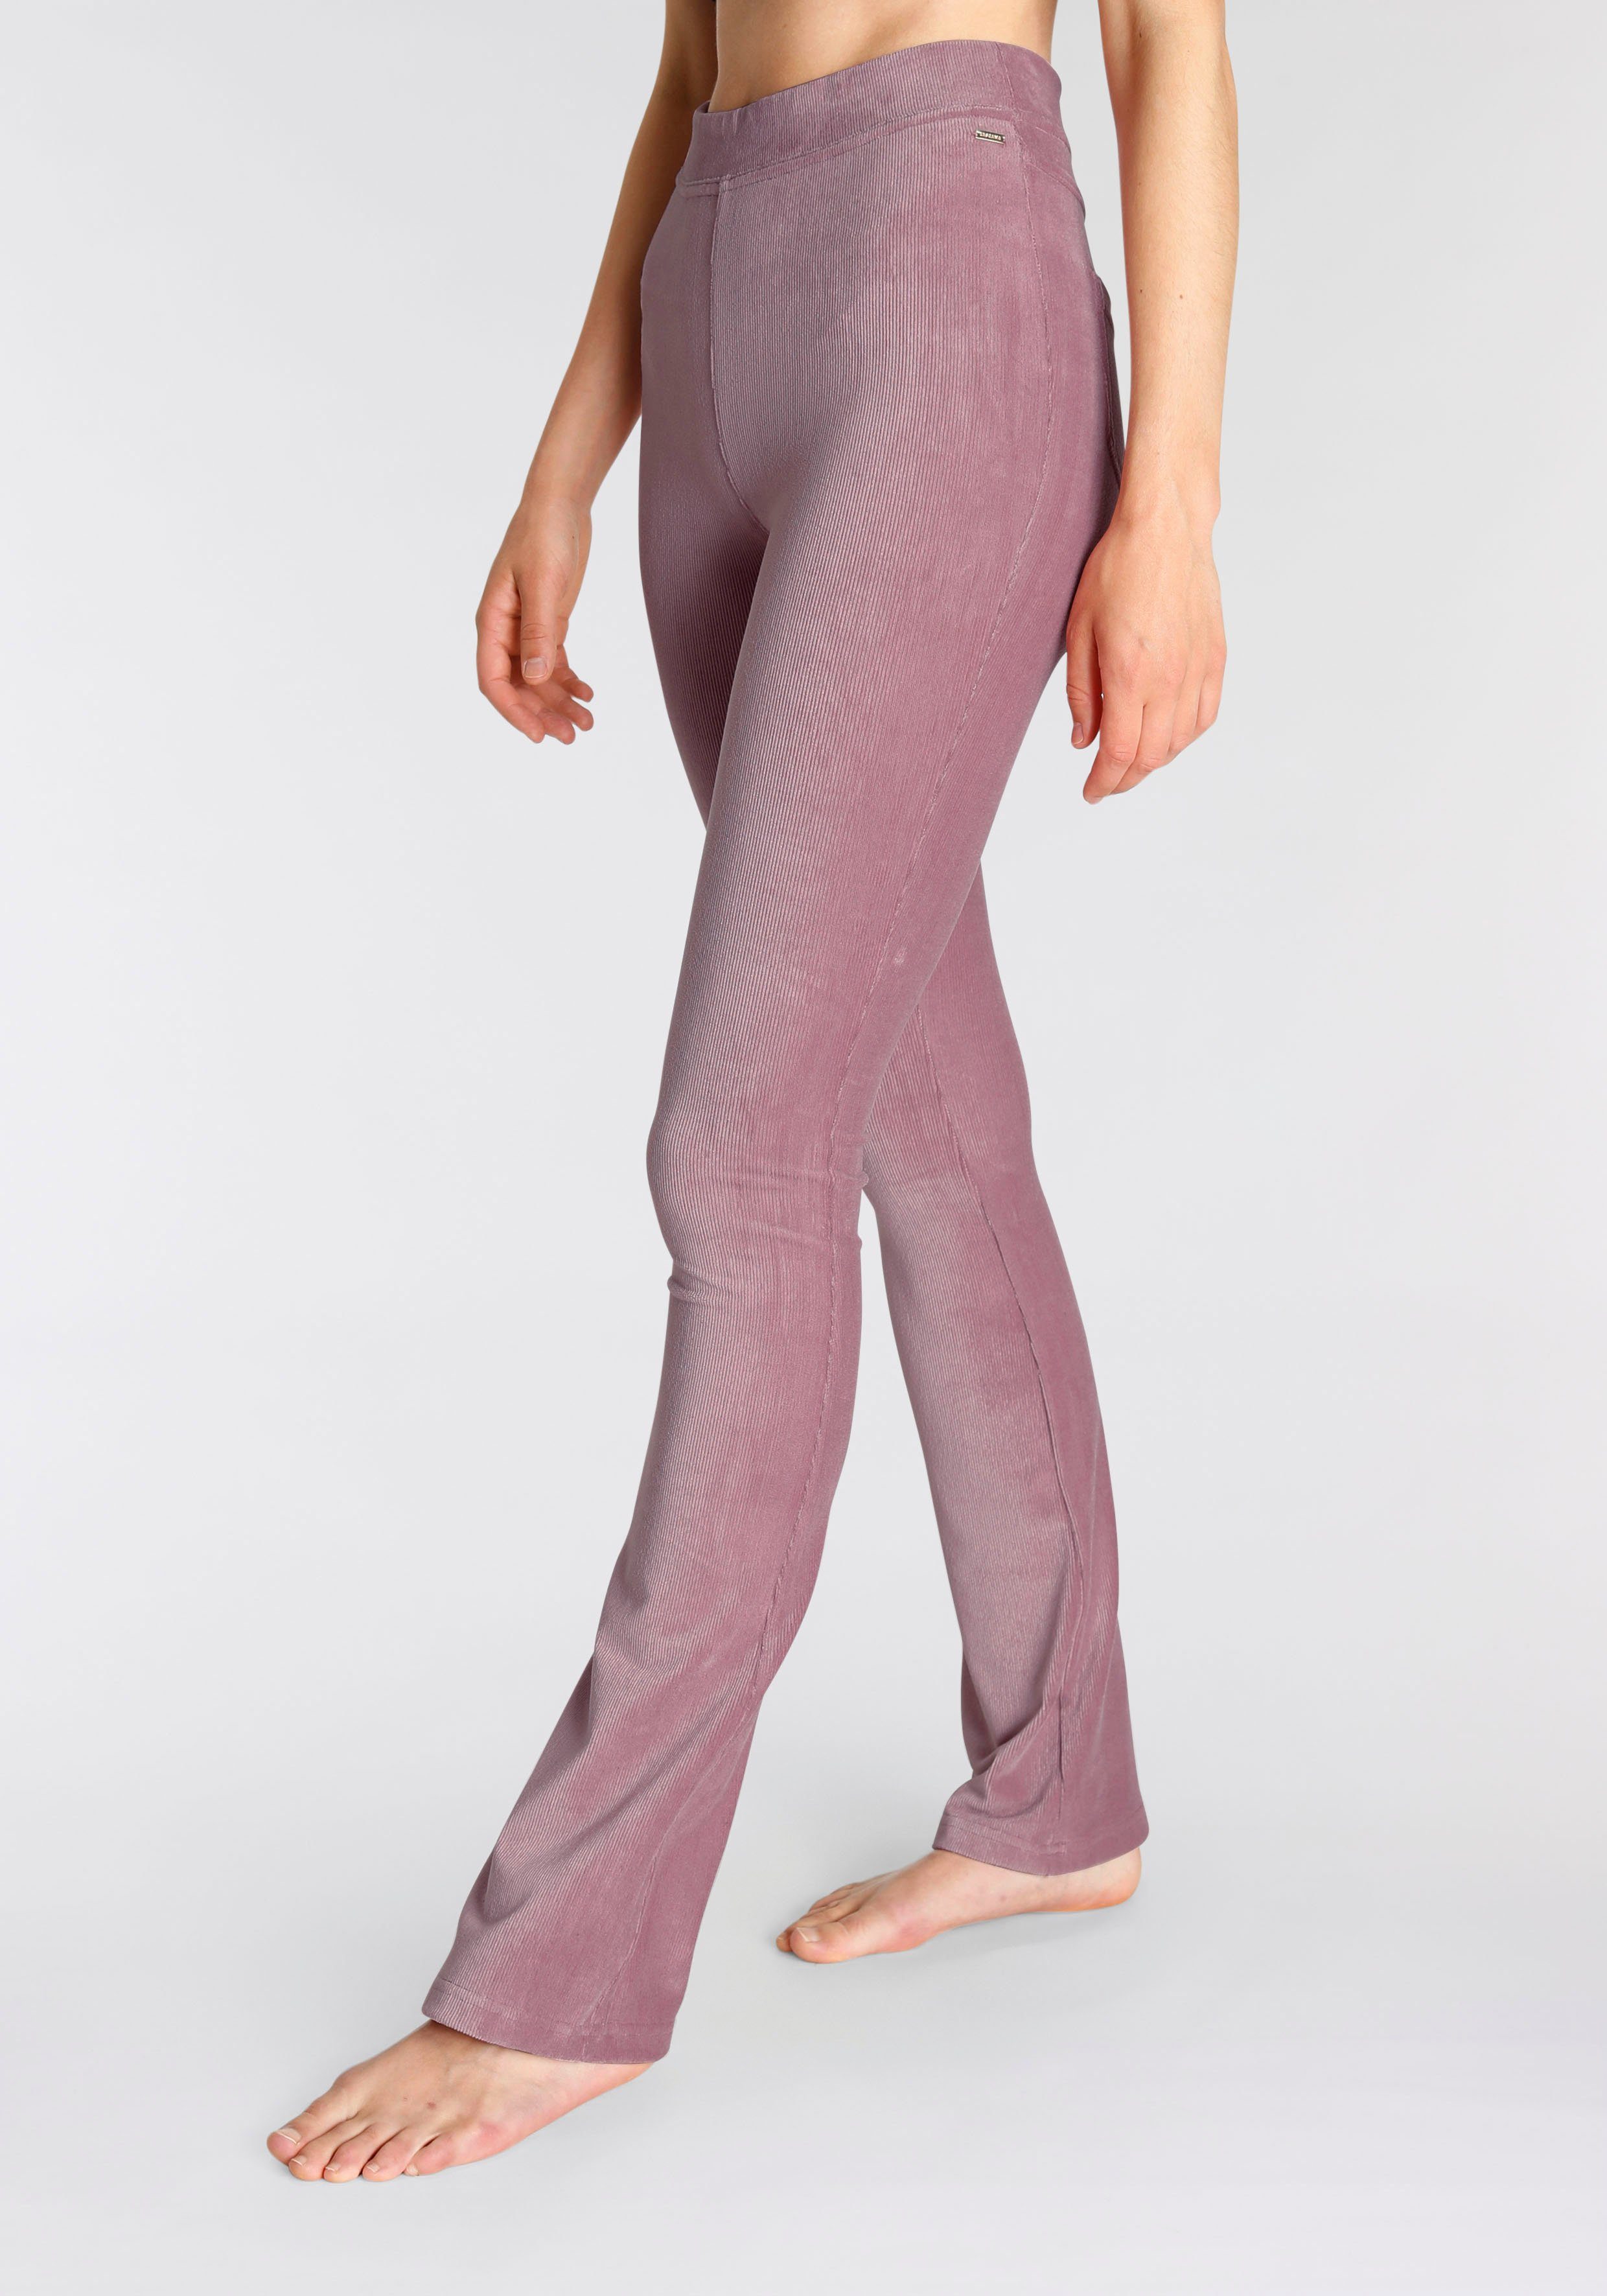 LASCANA Jazzpants Cord-Optik, rosa Loungewear Material weichem in aus